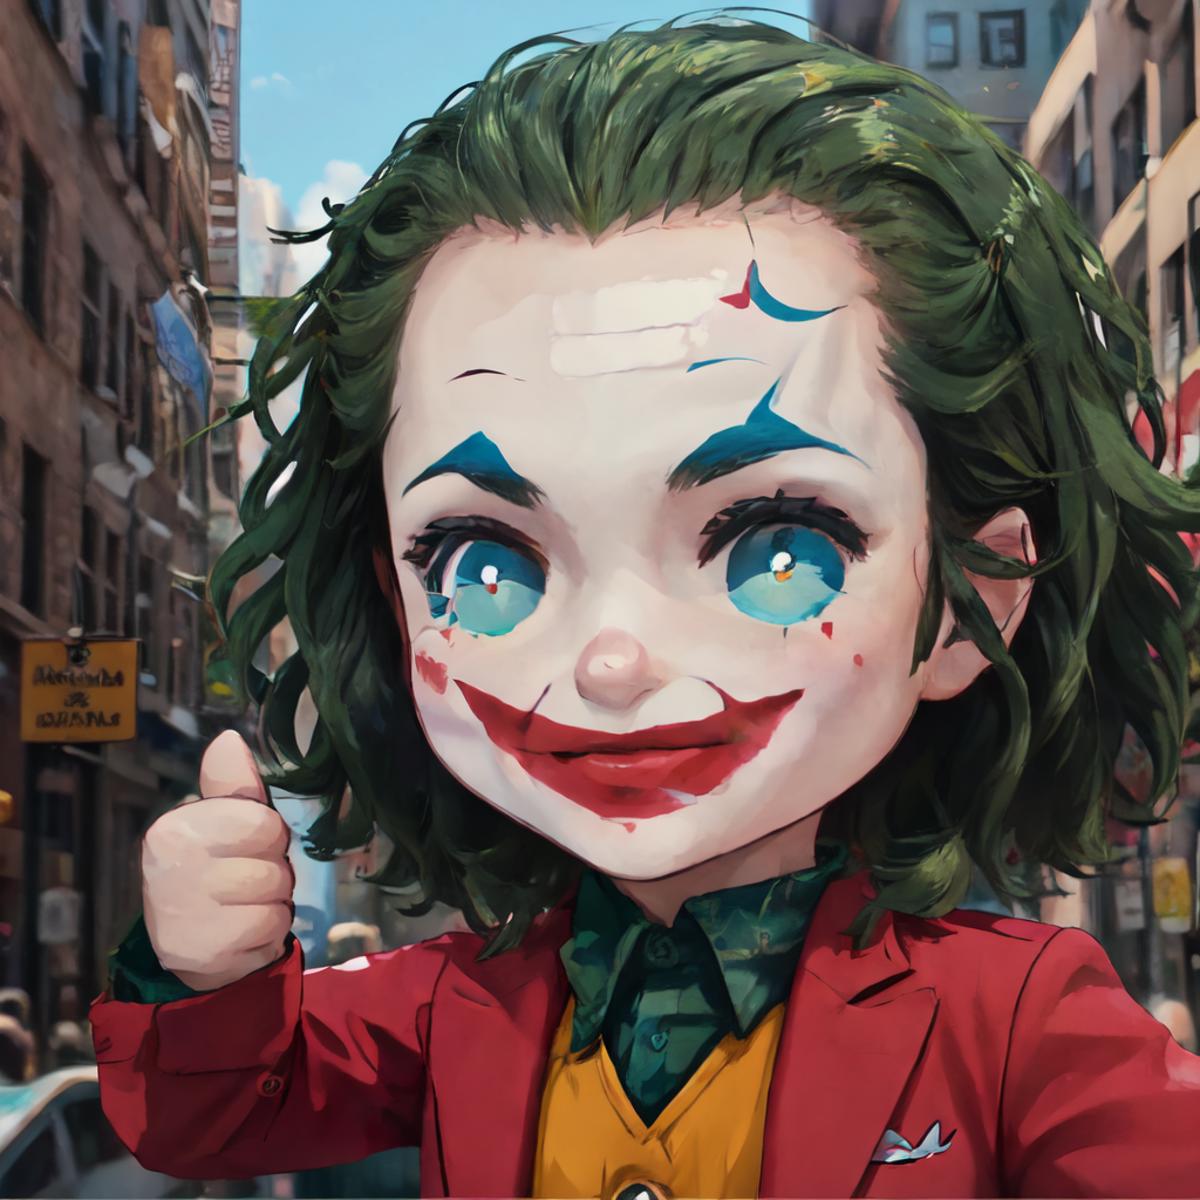 The Joker | Photorealistic Joker LoRa image by FallenIncursio